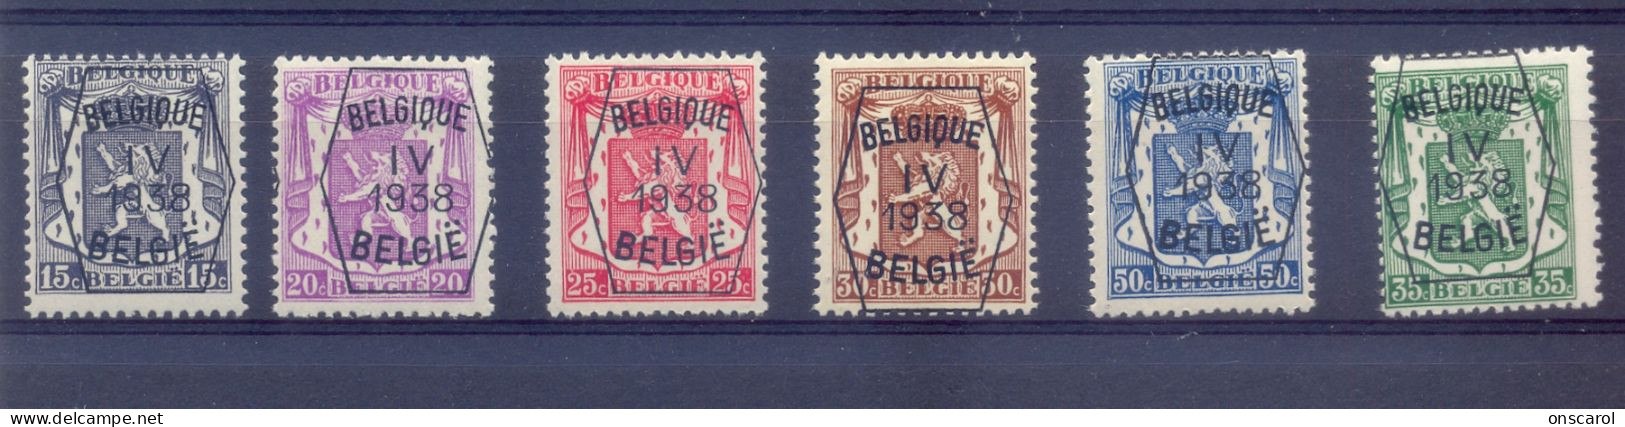 Reeks 4 PRE351/PRE356 Postgaaf ** MNH PRACHTIG - Typo Precancels 1936-51 (Small Seal Of The State)